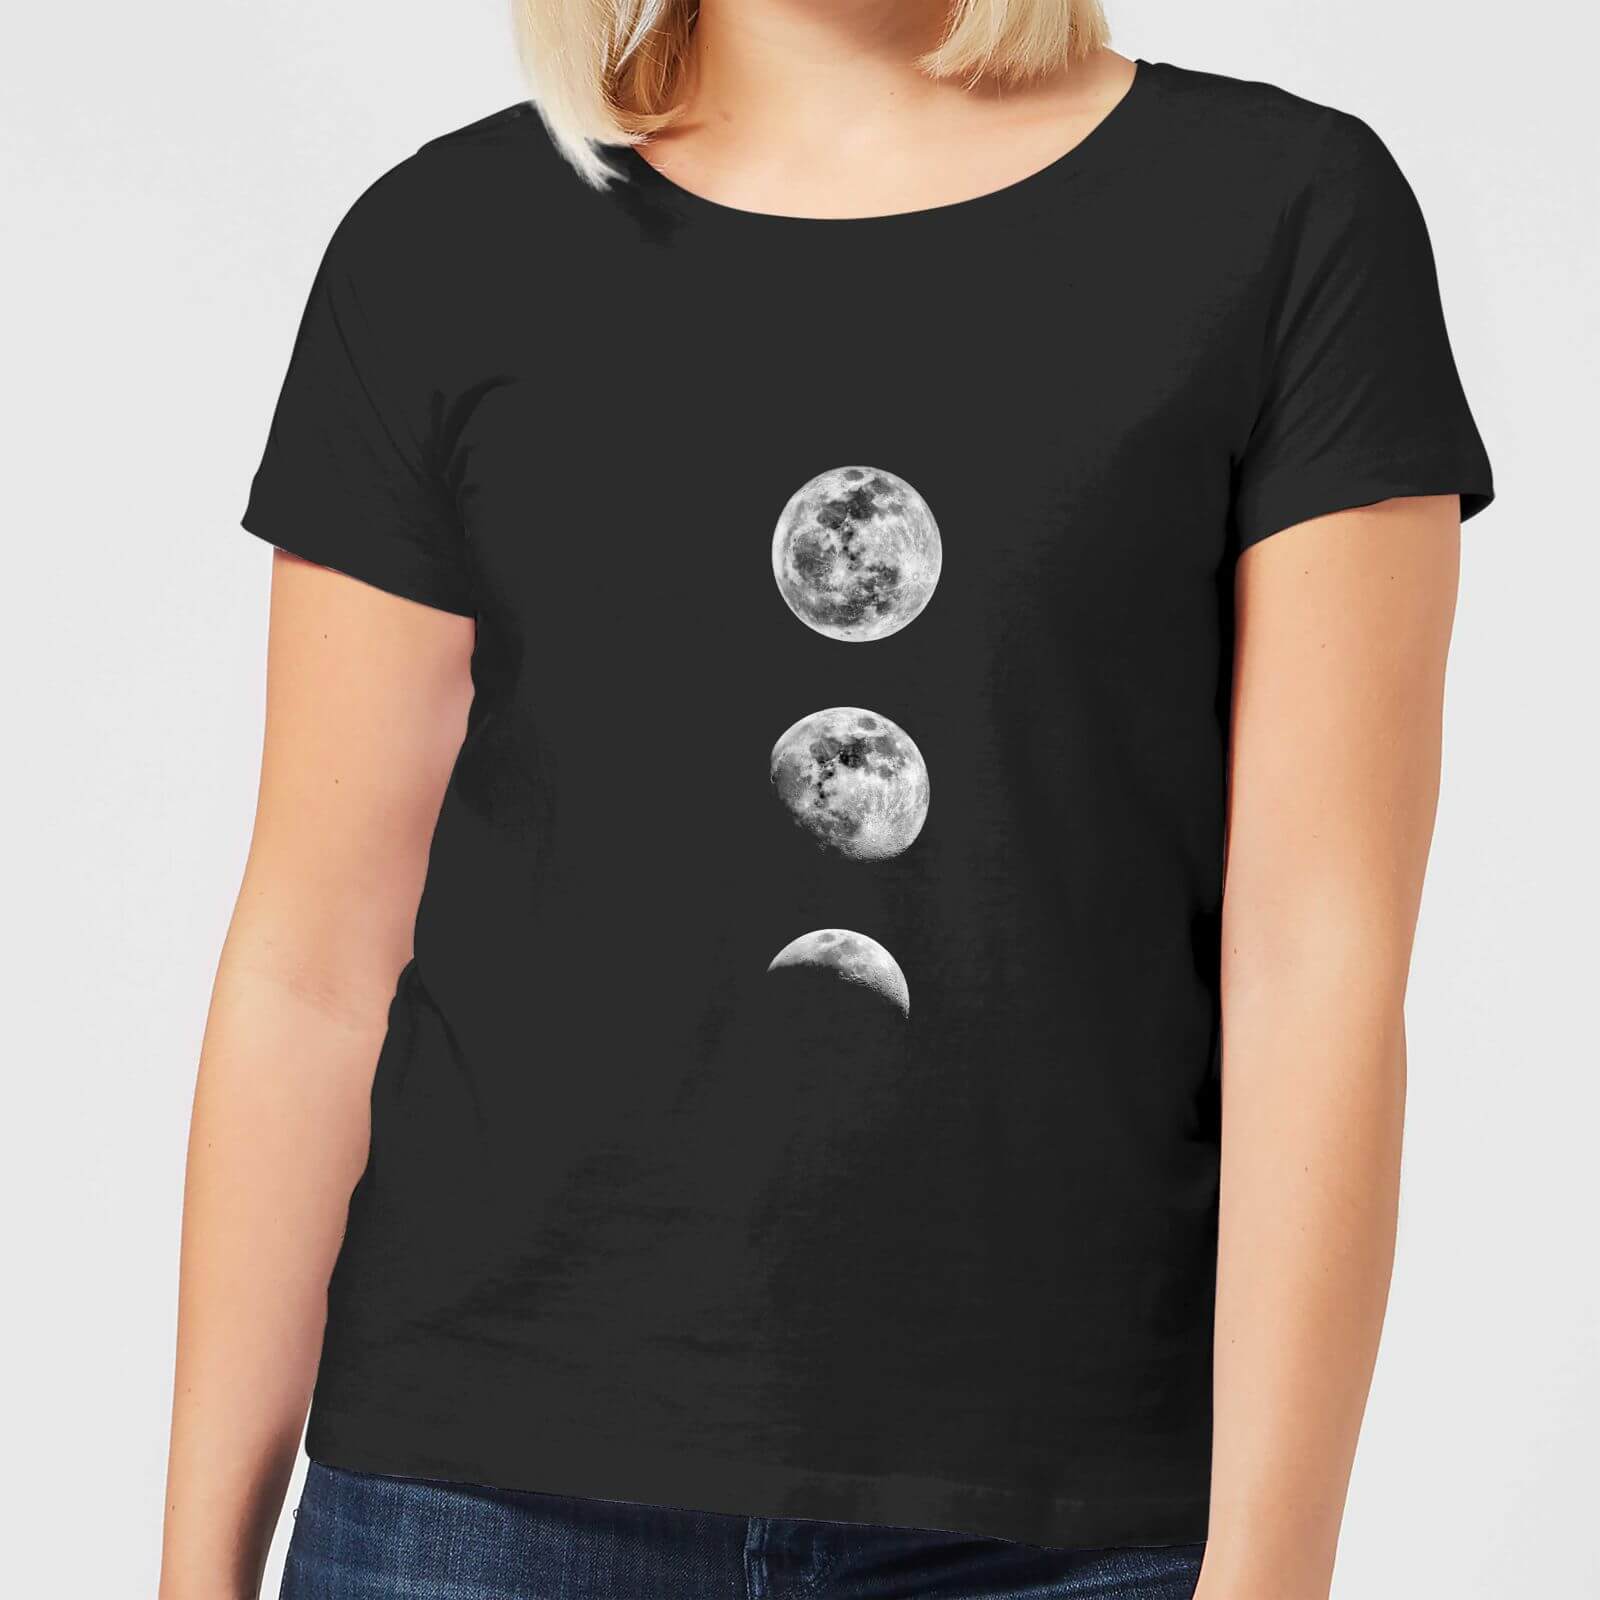 The Motivated Type 3 Moon Series Women's T-Shirt - Black - S - Black